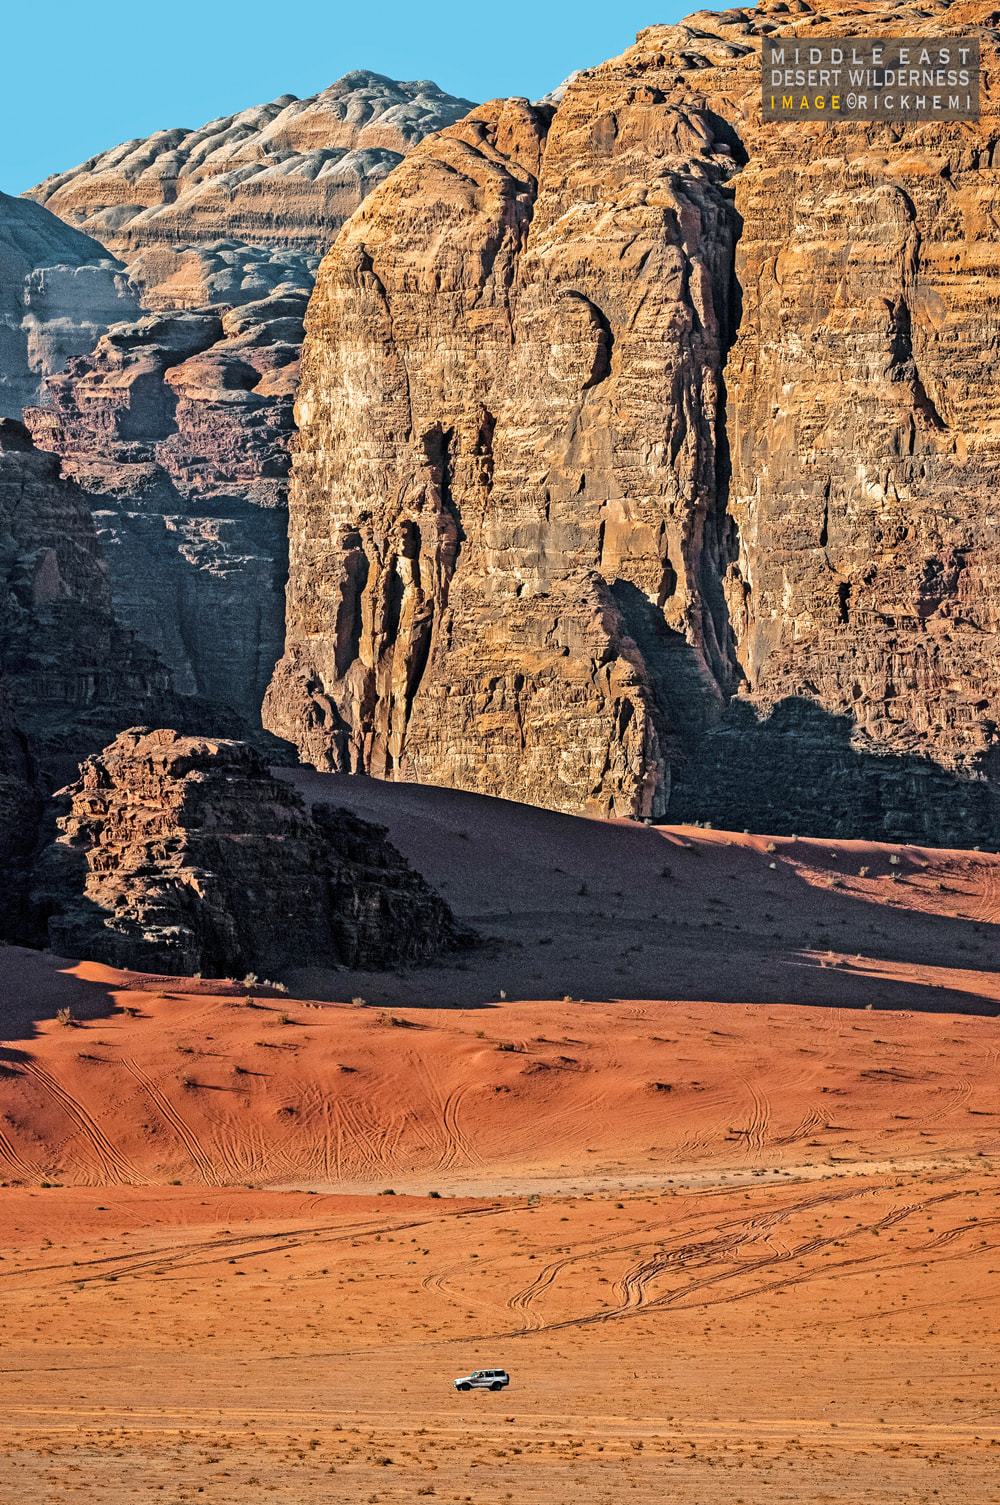 solo overland travel Middle East, desert landscape, self drive, image by Rick Hemi